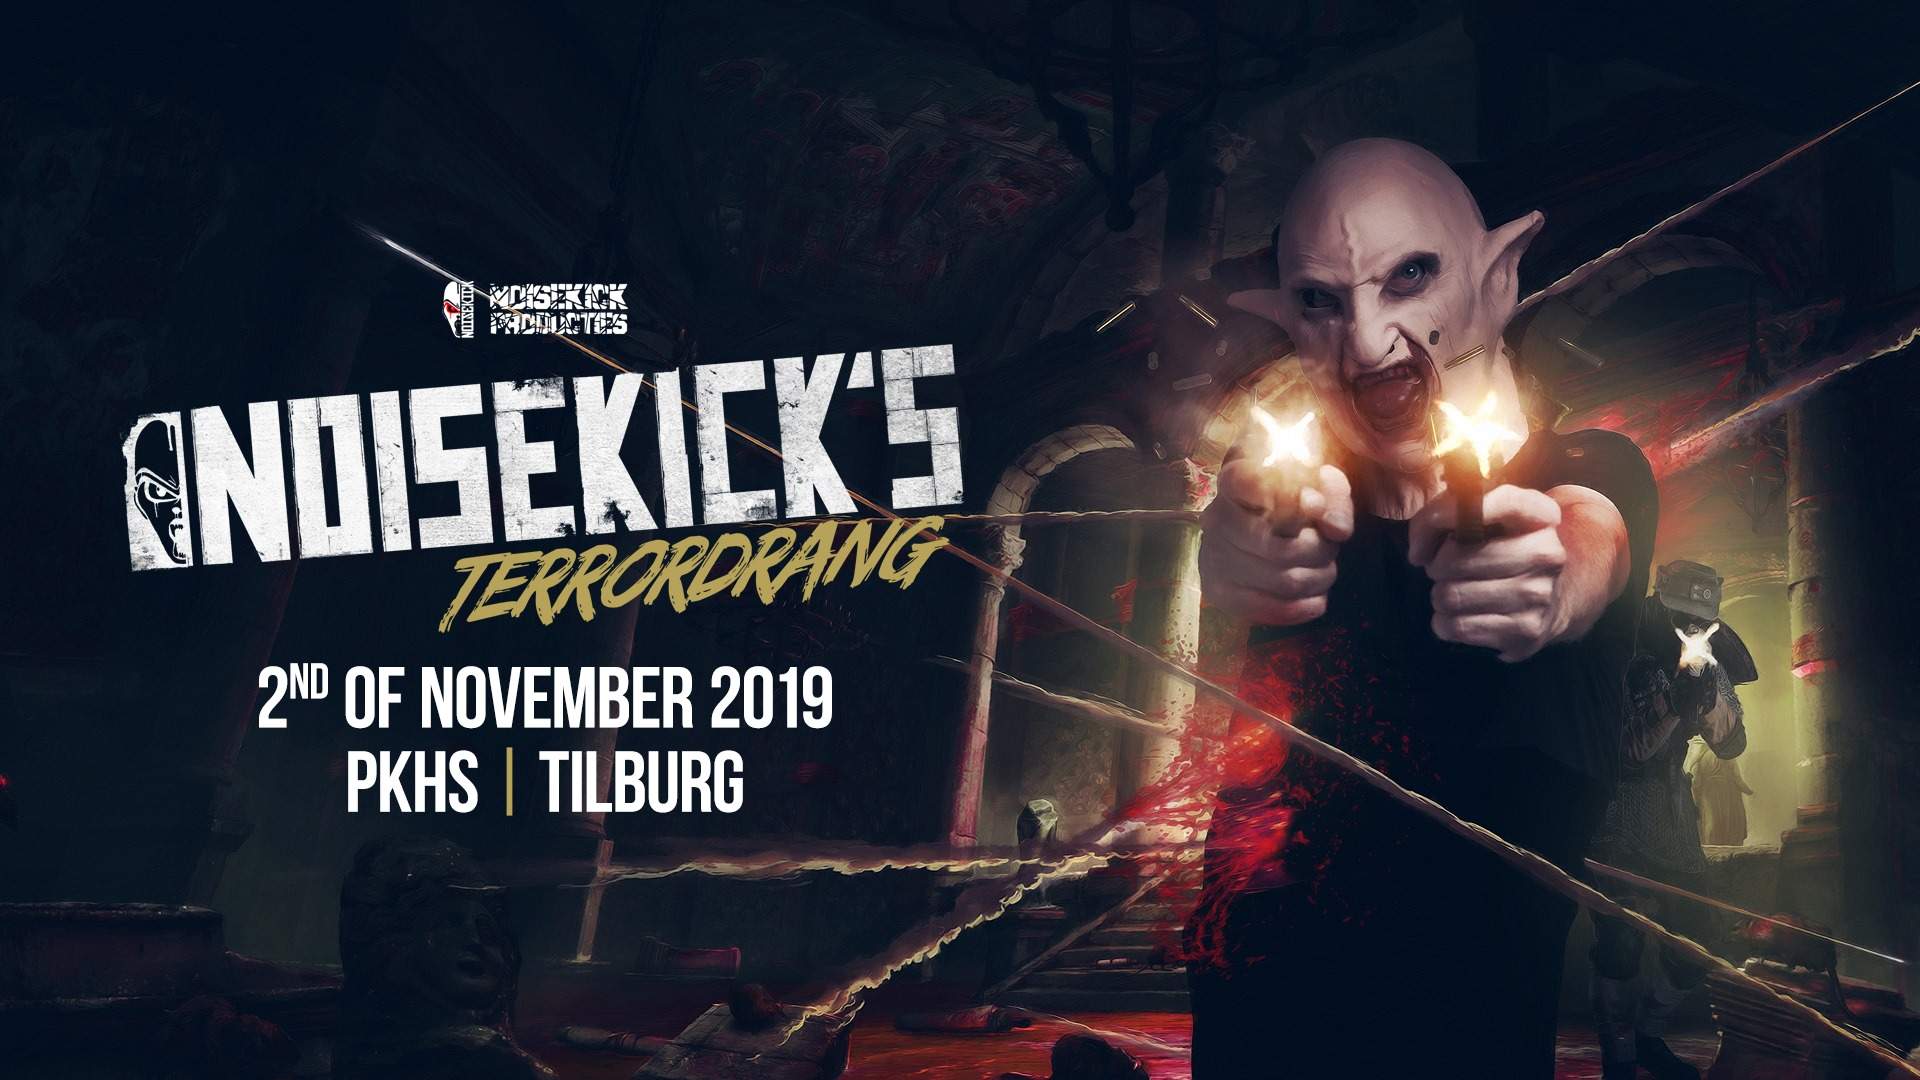 Noisekick's terrordrang Speedcore Italia Deadtown